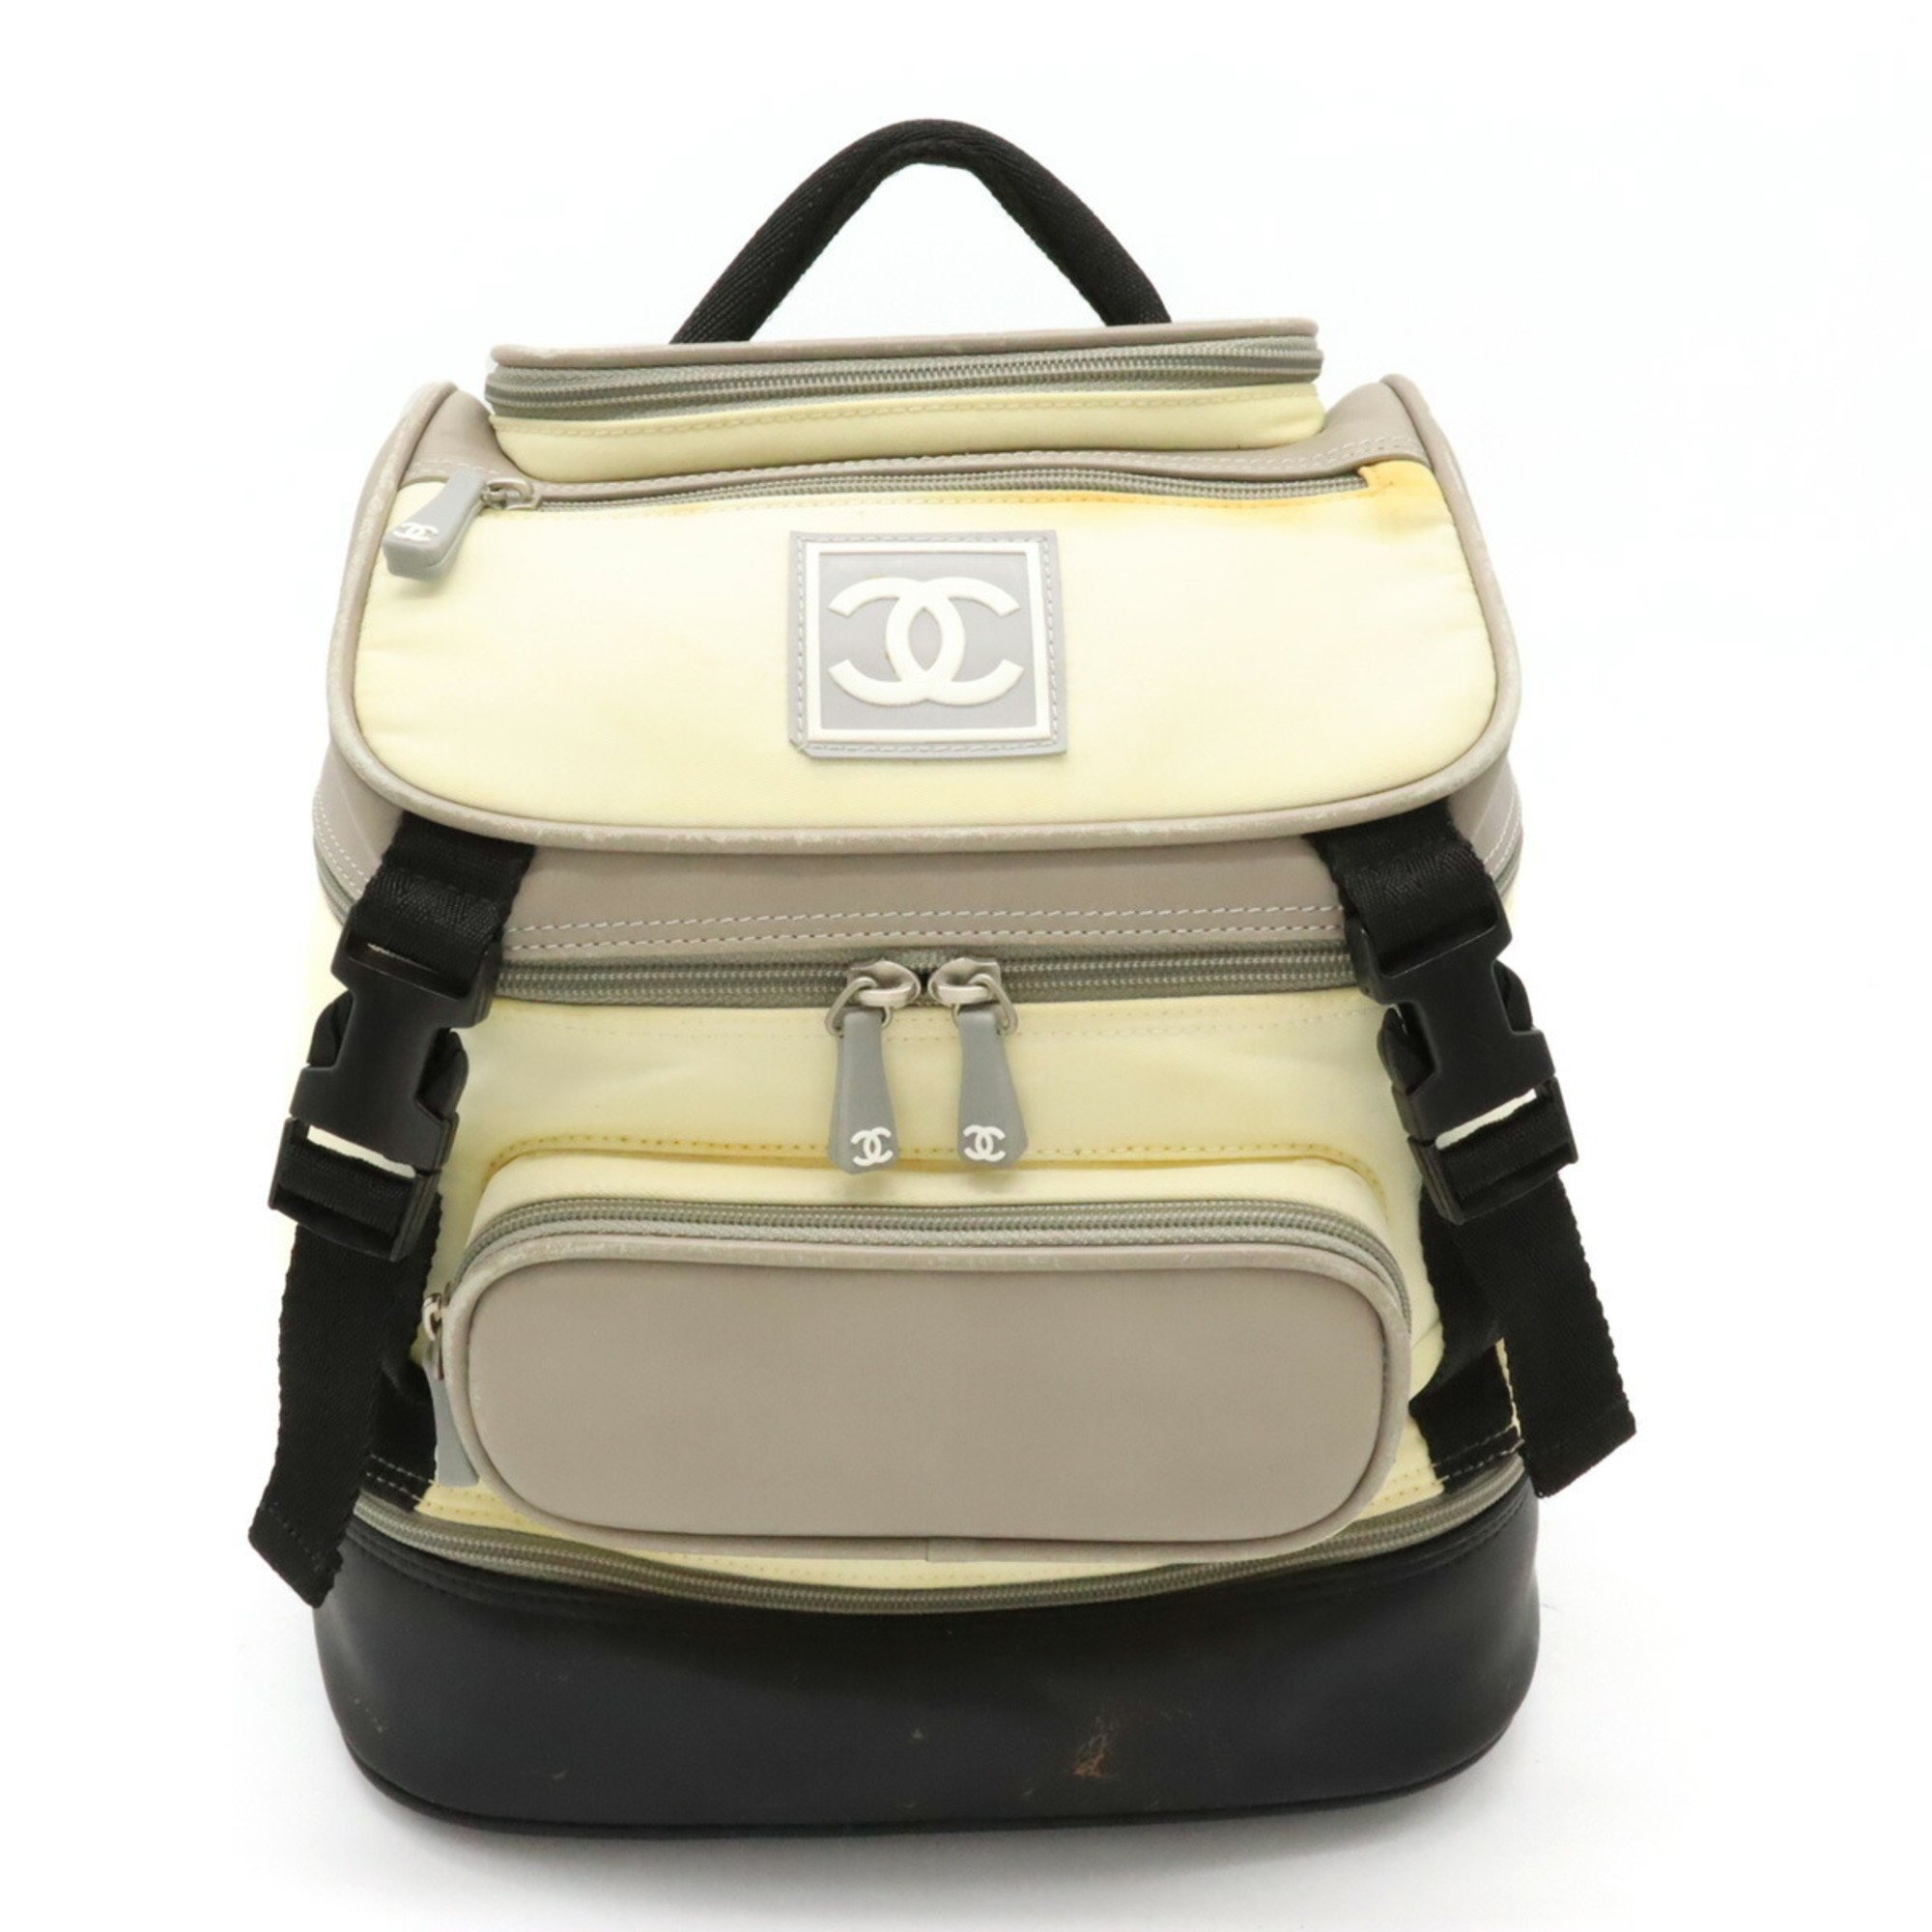 CHANEL Chanel Sport Line Coco Mark Backpack Rucksack Nylon Rubber Ivory White Black Gray A03595